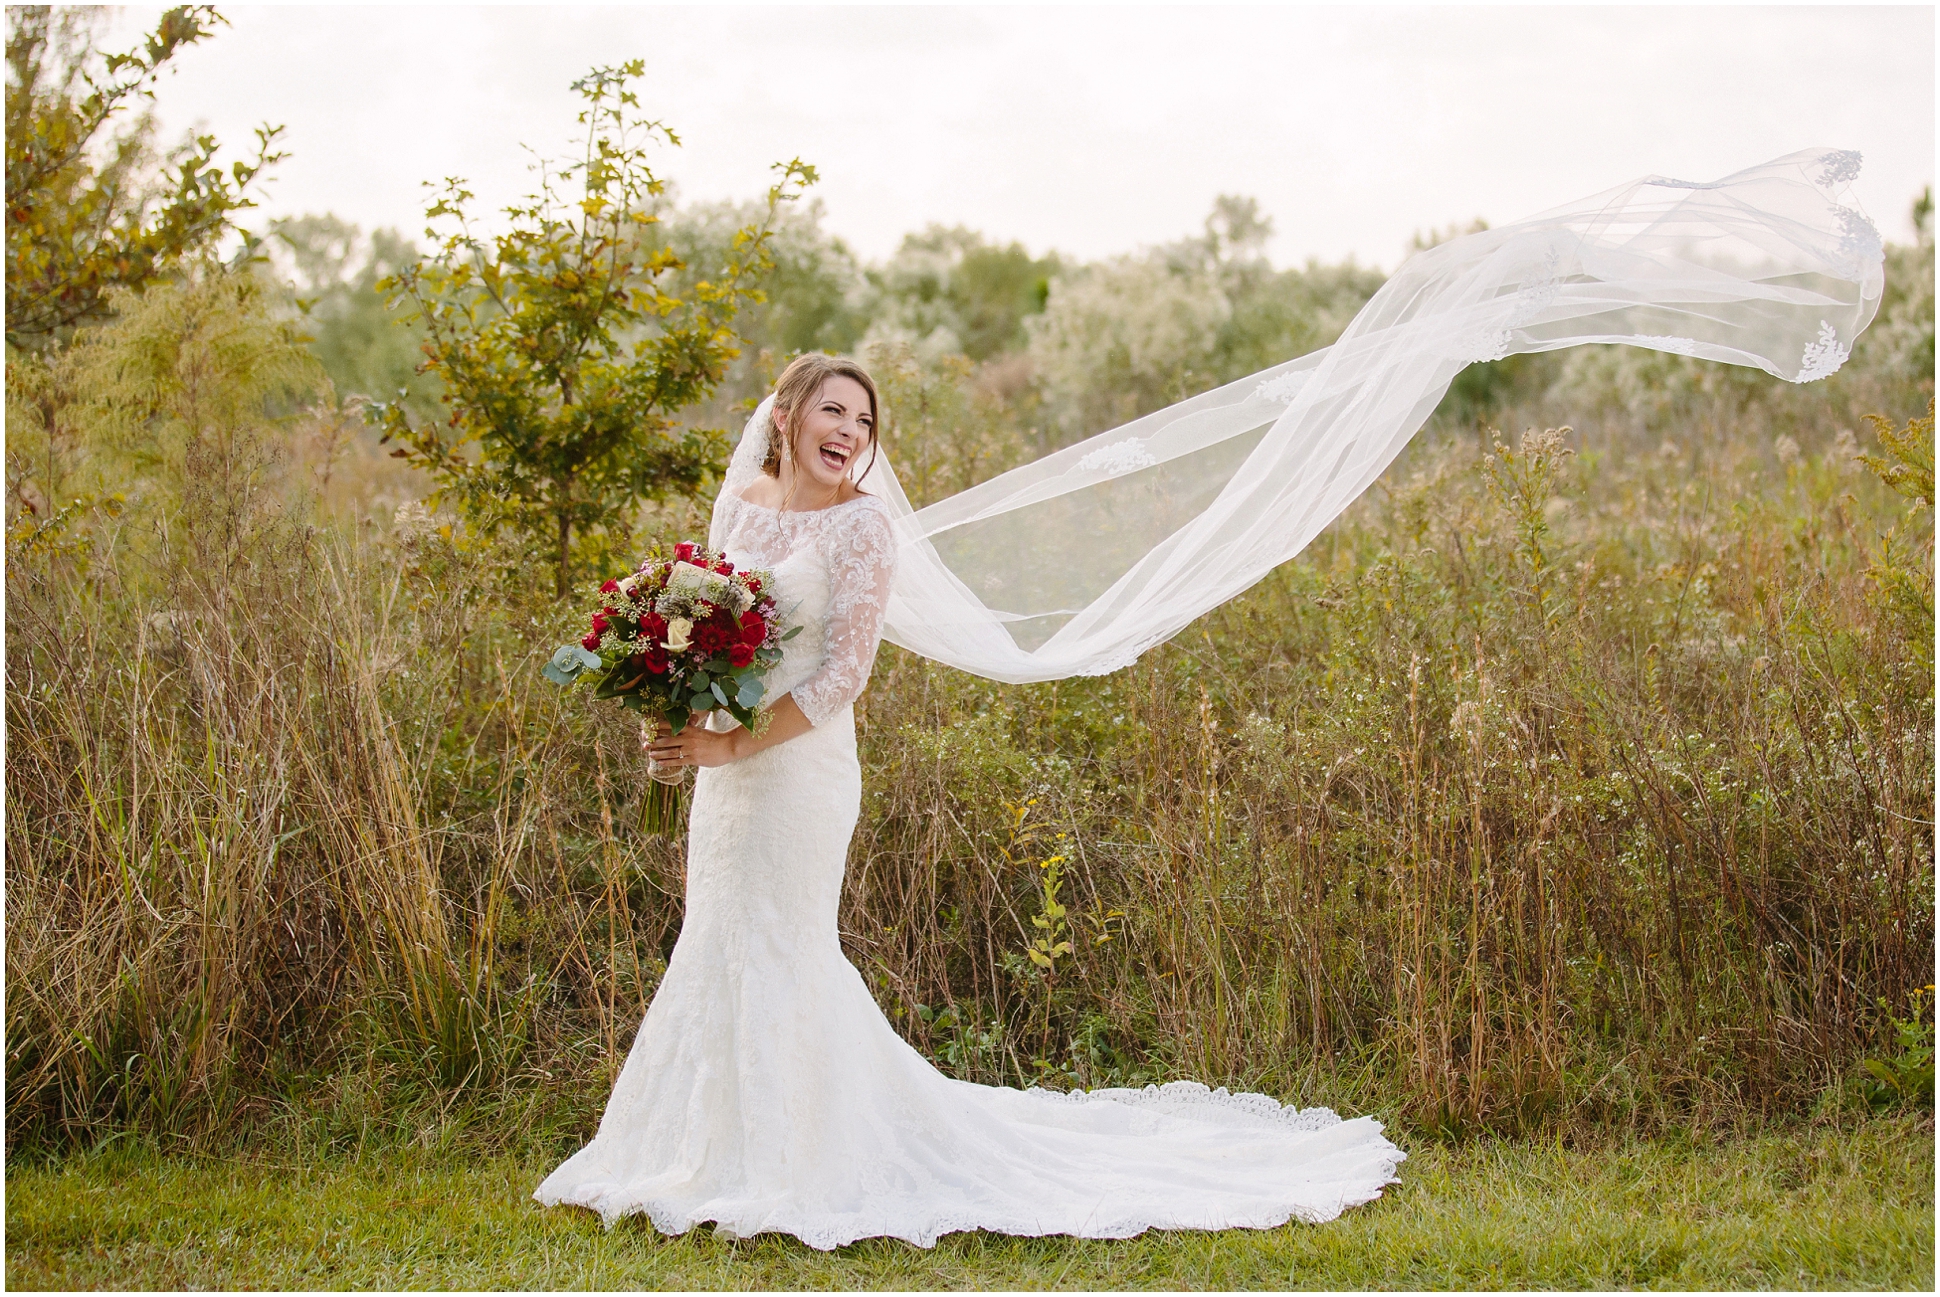 A Dreamy High Cotton Field Wedding | Twin Oaks Farm | Georgia Wedding Photographers | Two Chics Photography | www.twochicsphotography.com